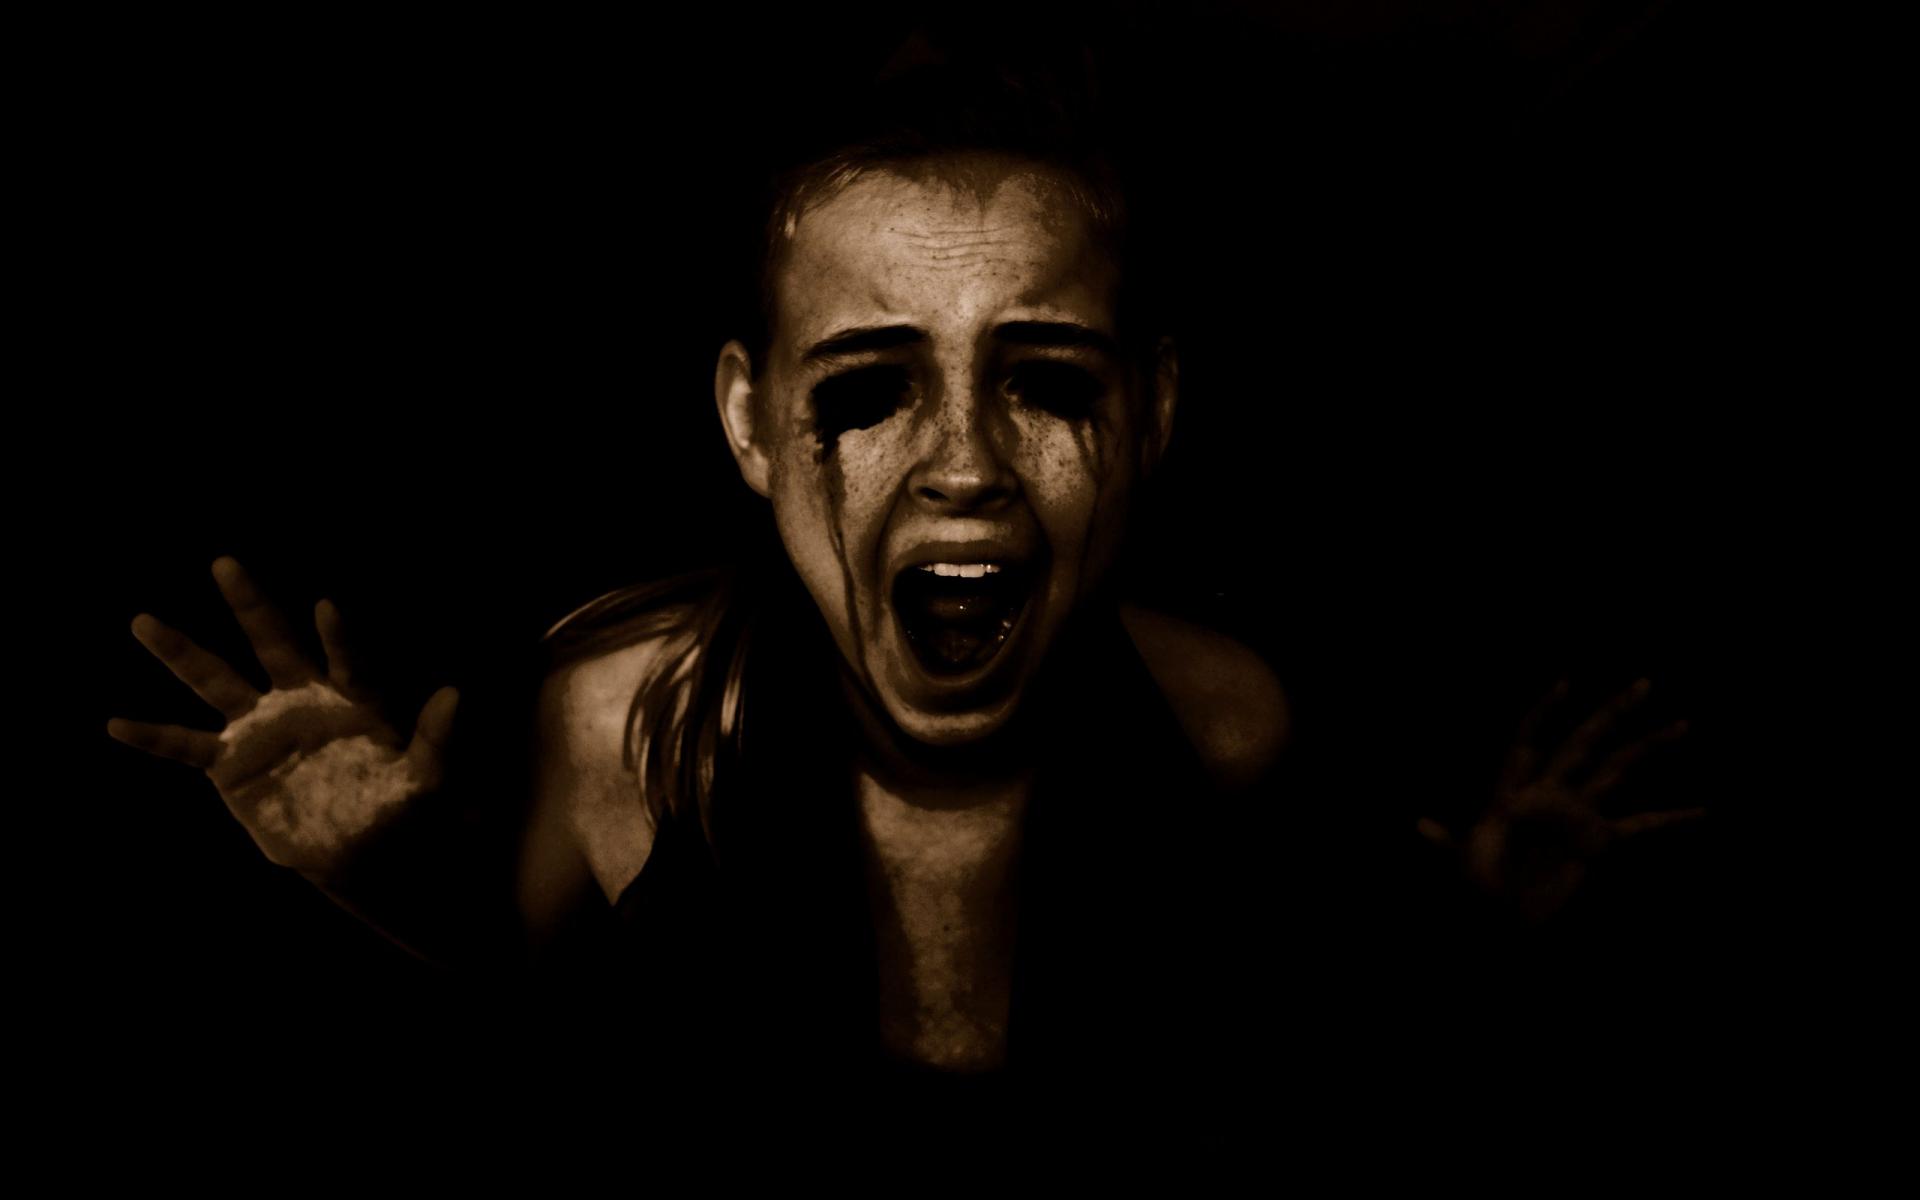 Evil Scary Creepy Spooky Halloween Women Girls Blood Demons Face